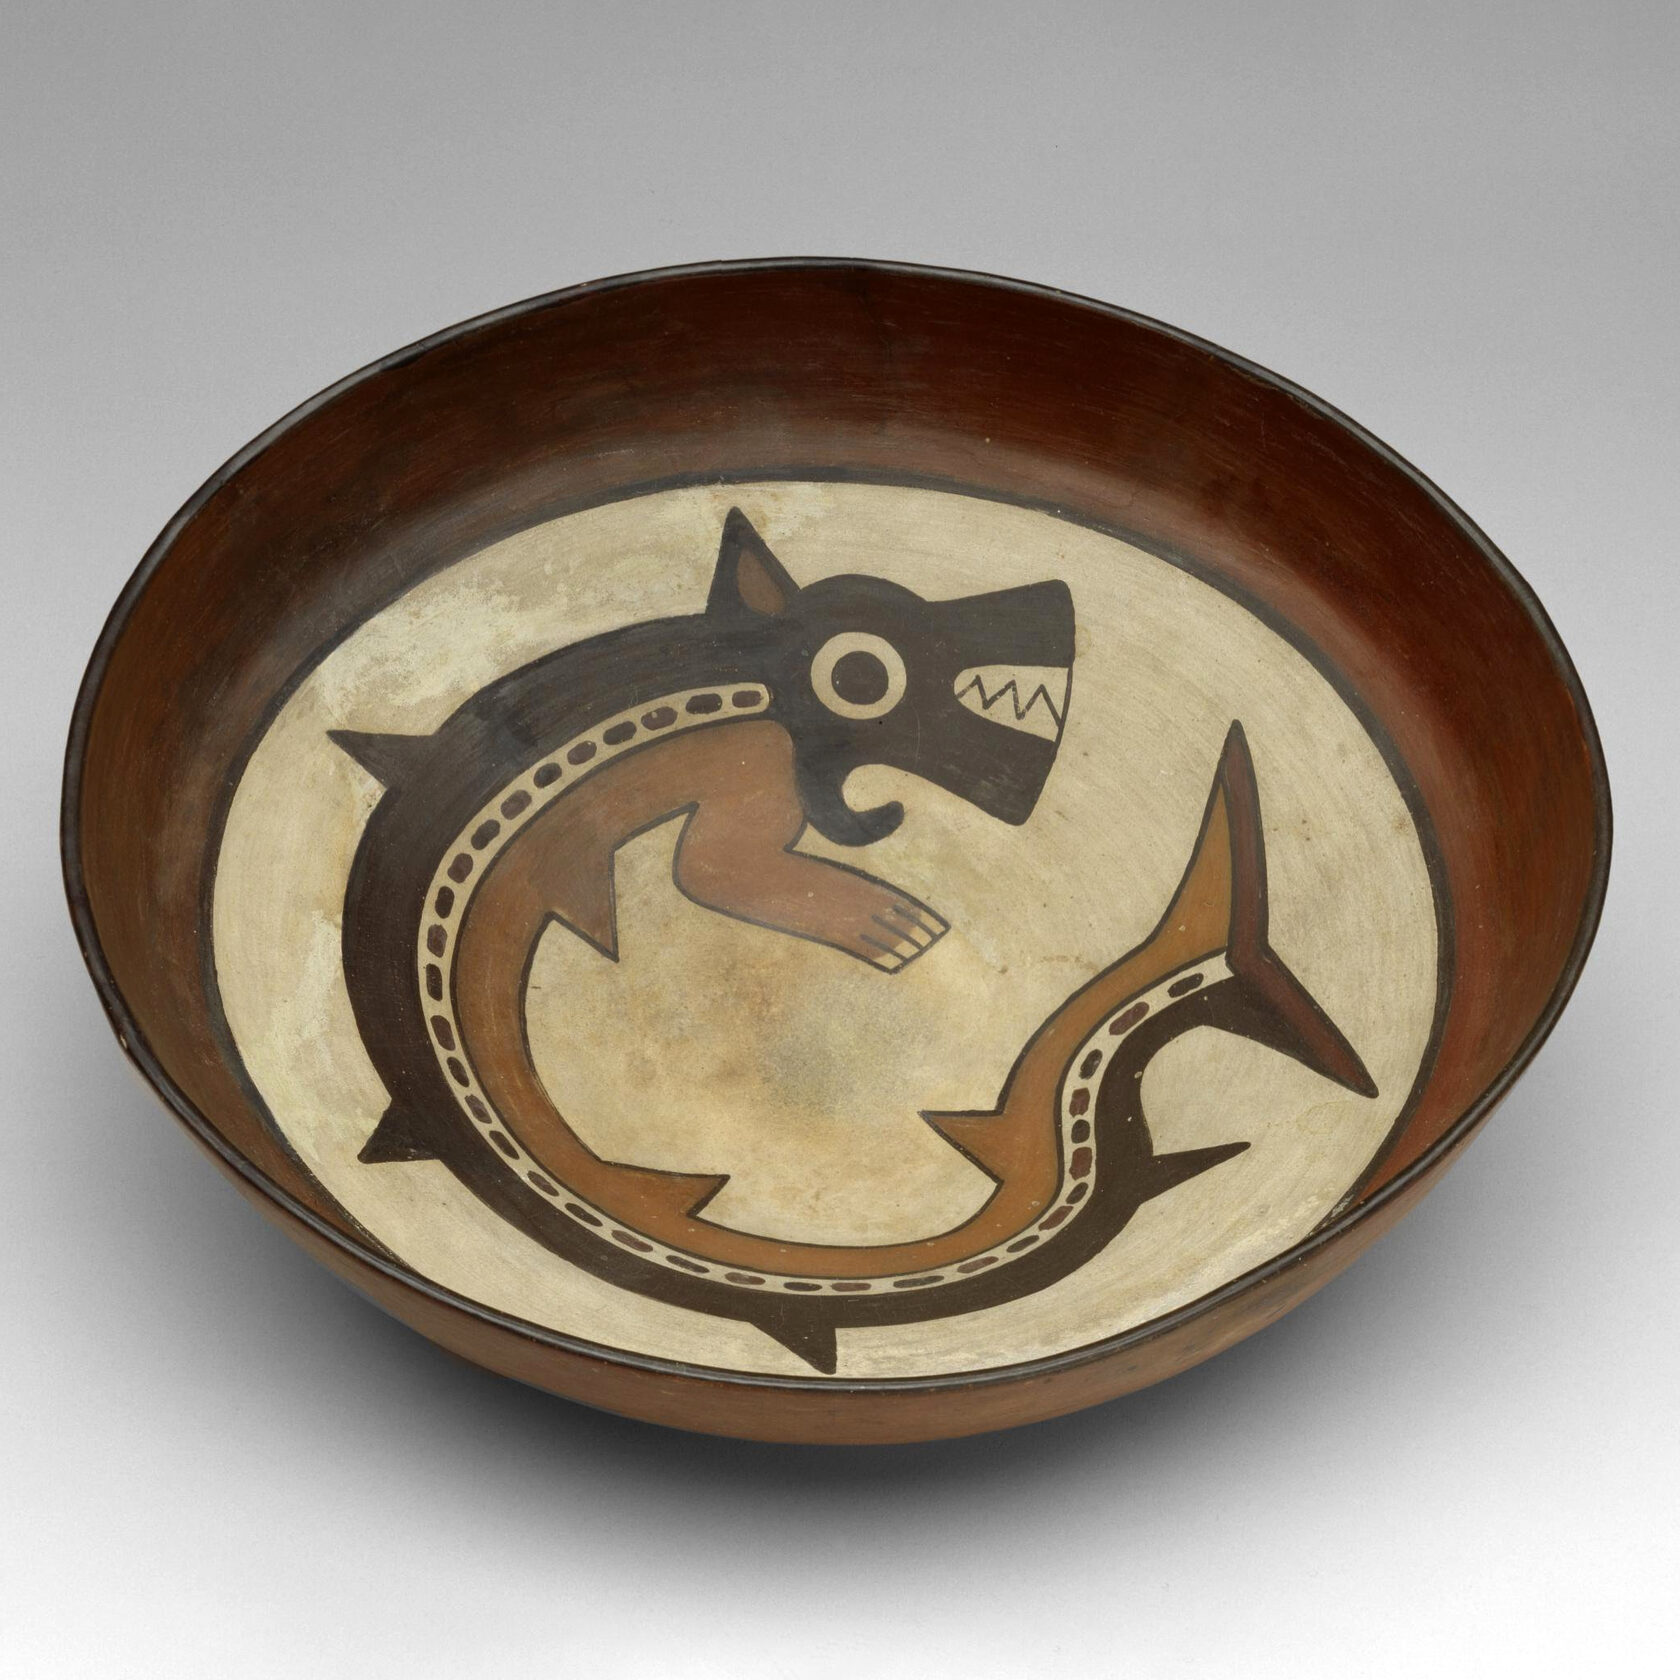 Блюдо. Наска, 100 гг. до н.э. - 700 гг. н.э. Коллекция Museum of Fine Arts, Houston.